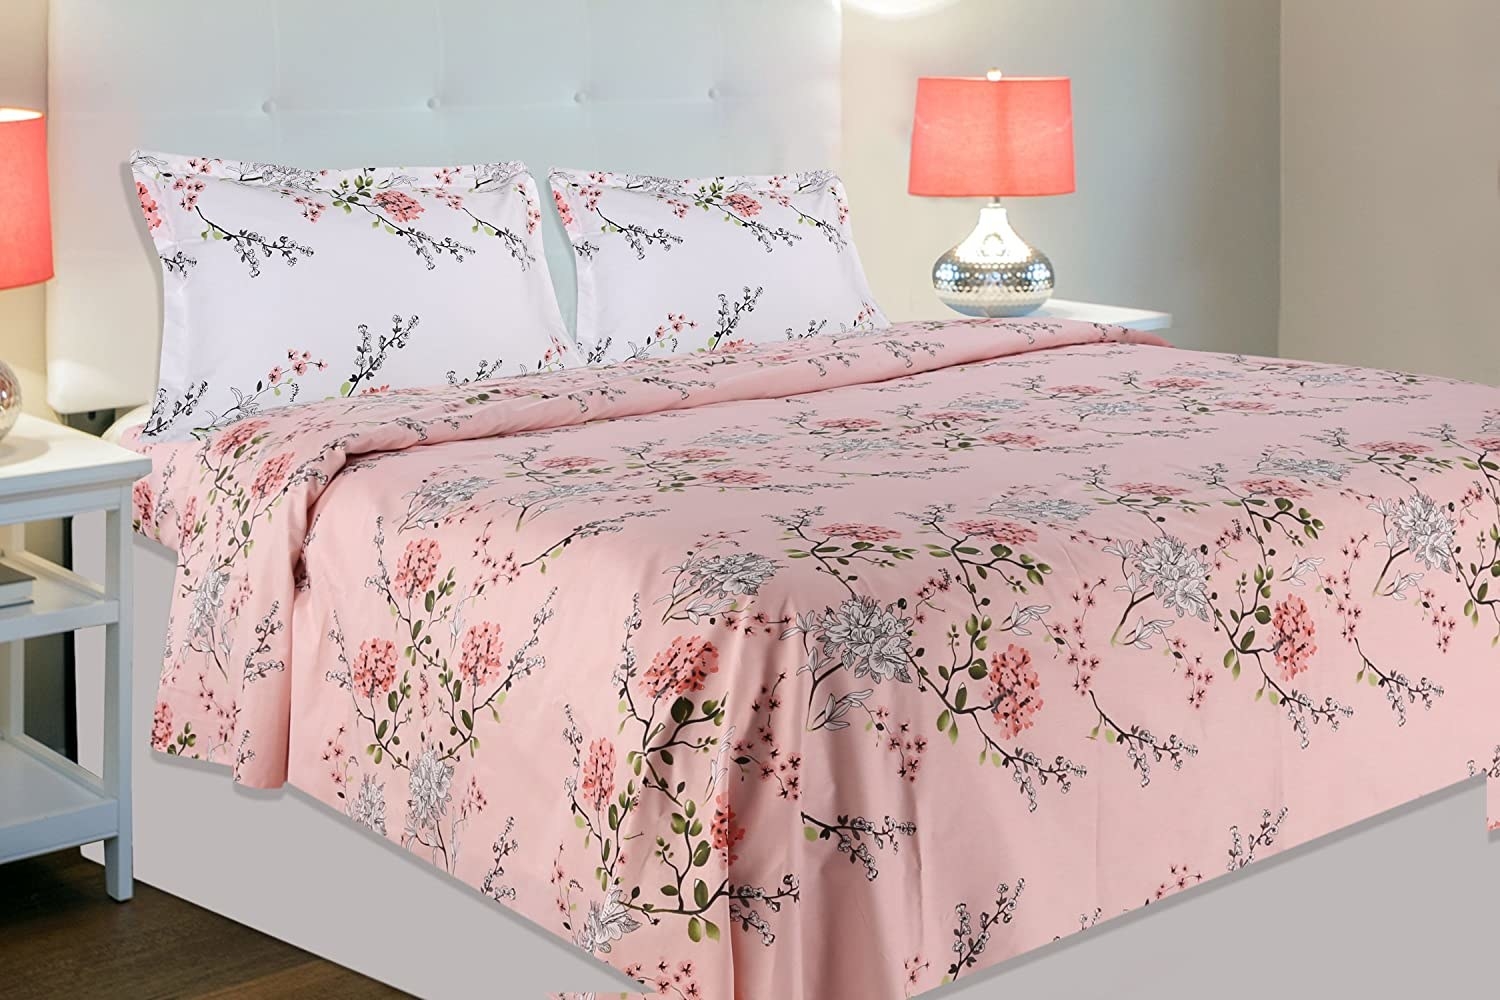 Floral bedsheet on a bed